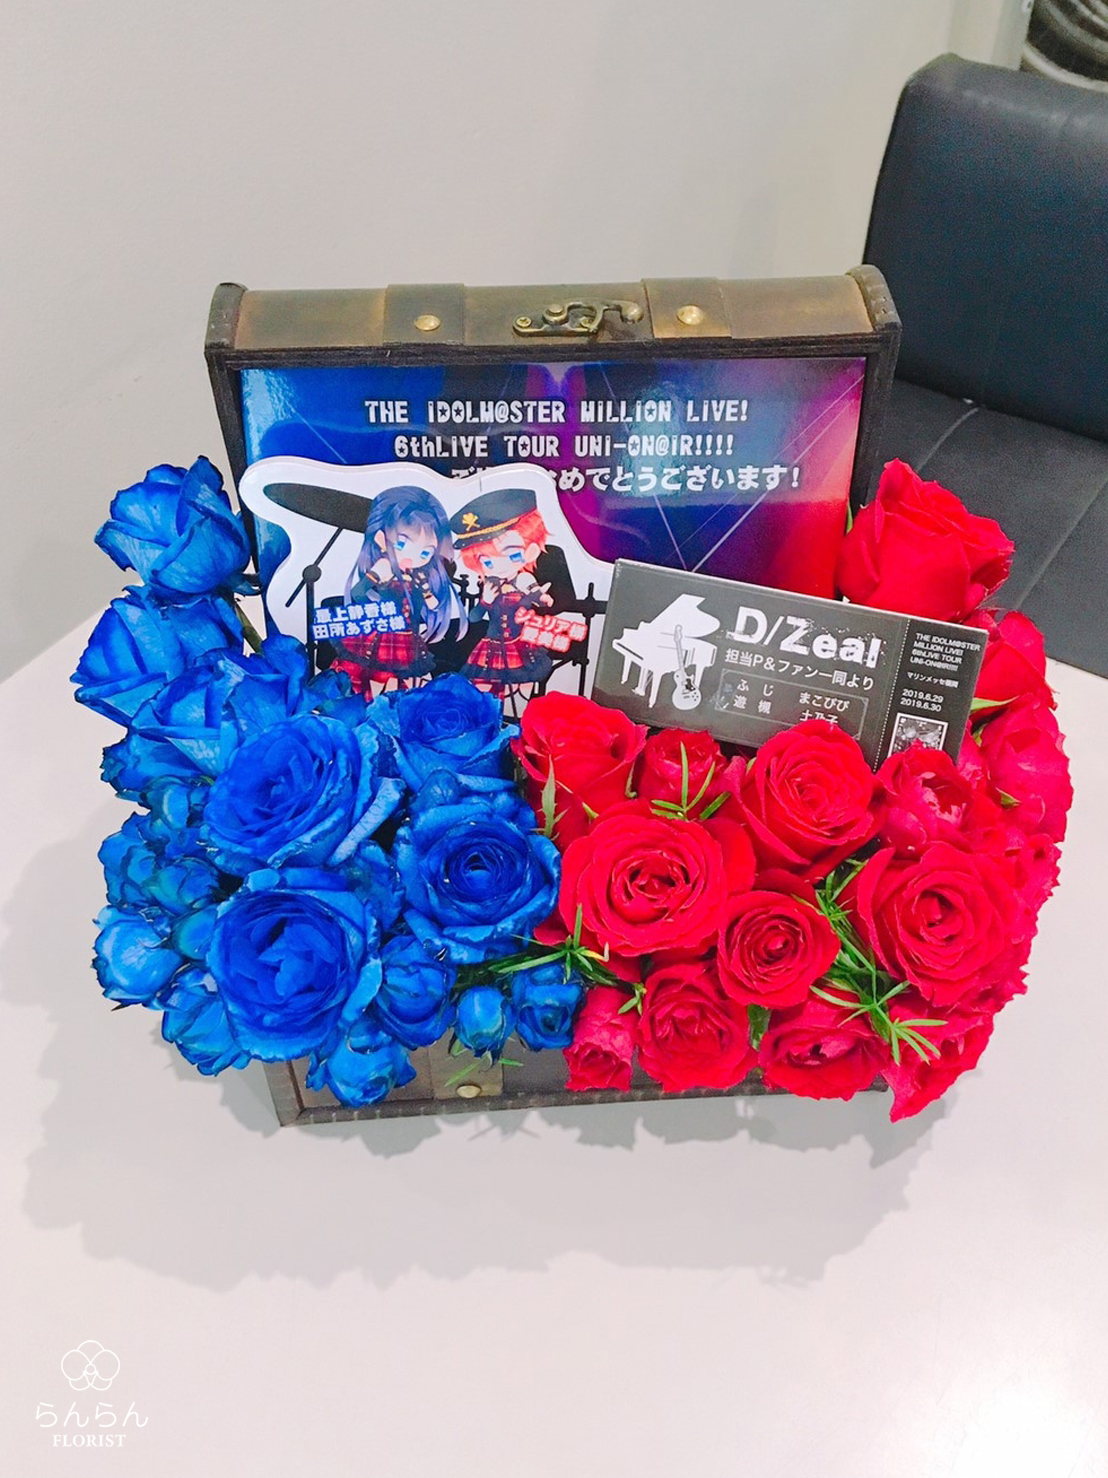 THE IDOLM@STER MILLION LIVE! 6thLIVE TOUR UNI-ON@IR!!!!ご出演者 楽屋花